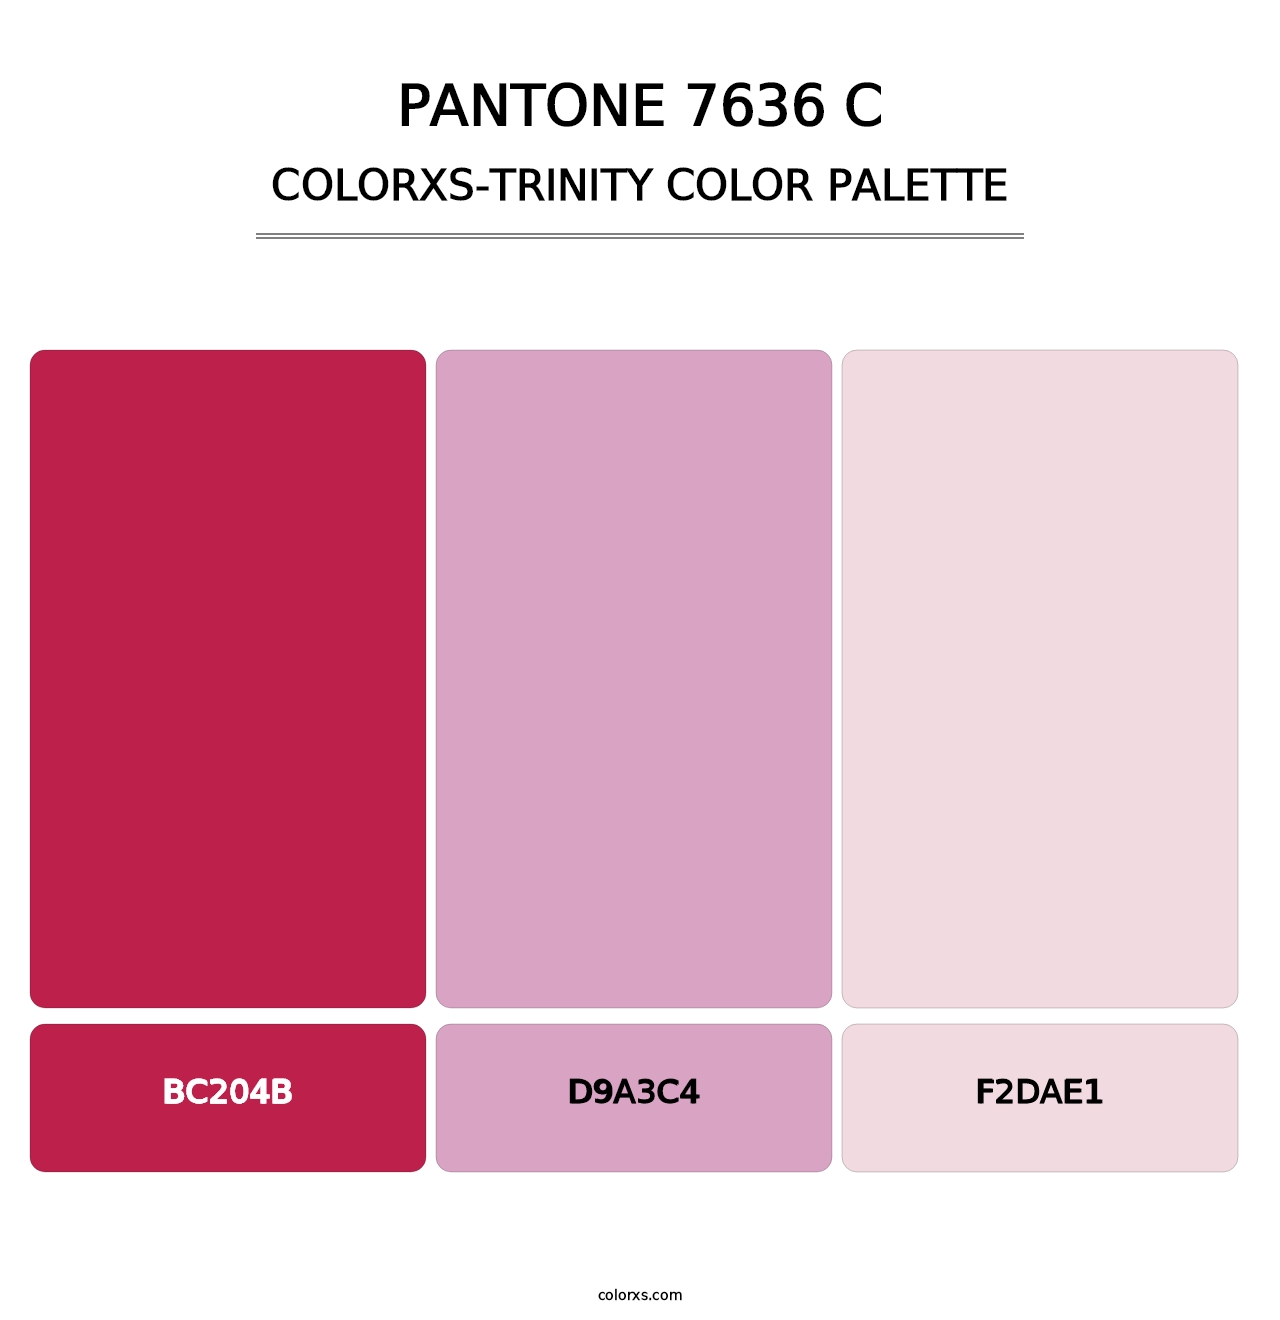 PANTONE 7636 C - Colorxs Trinity Palette